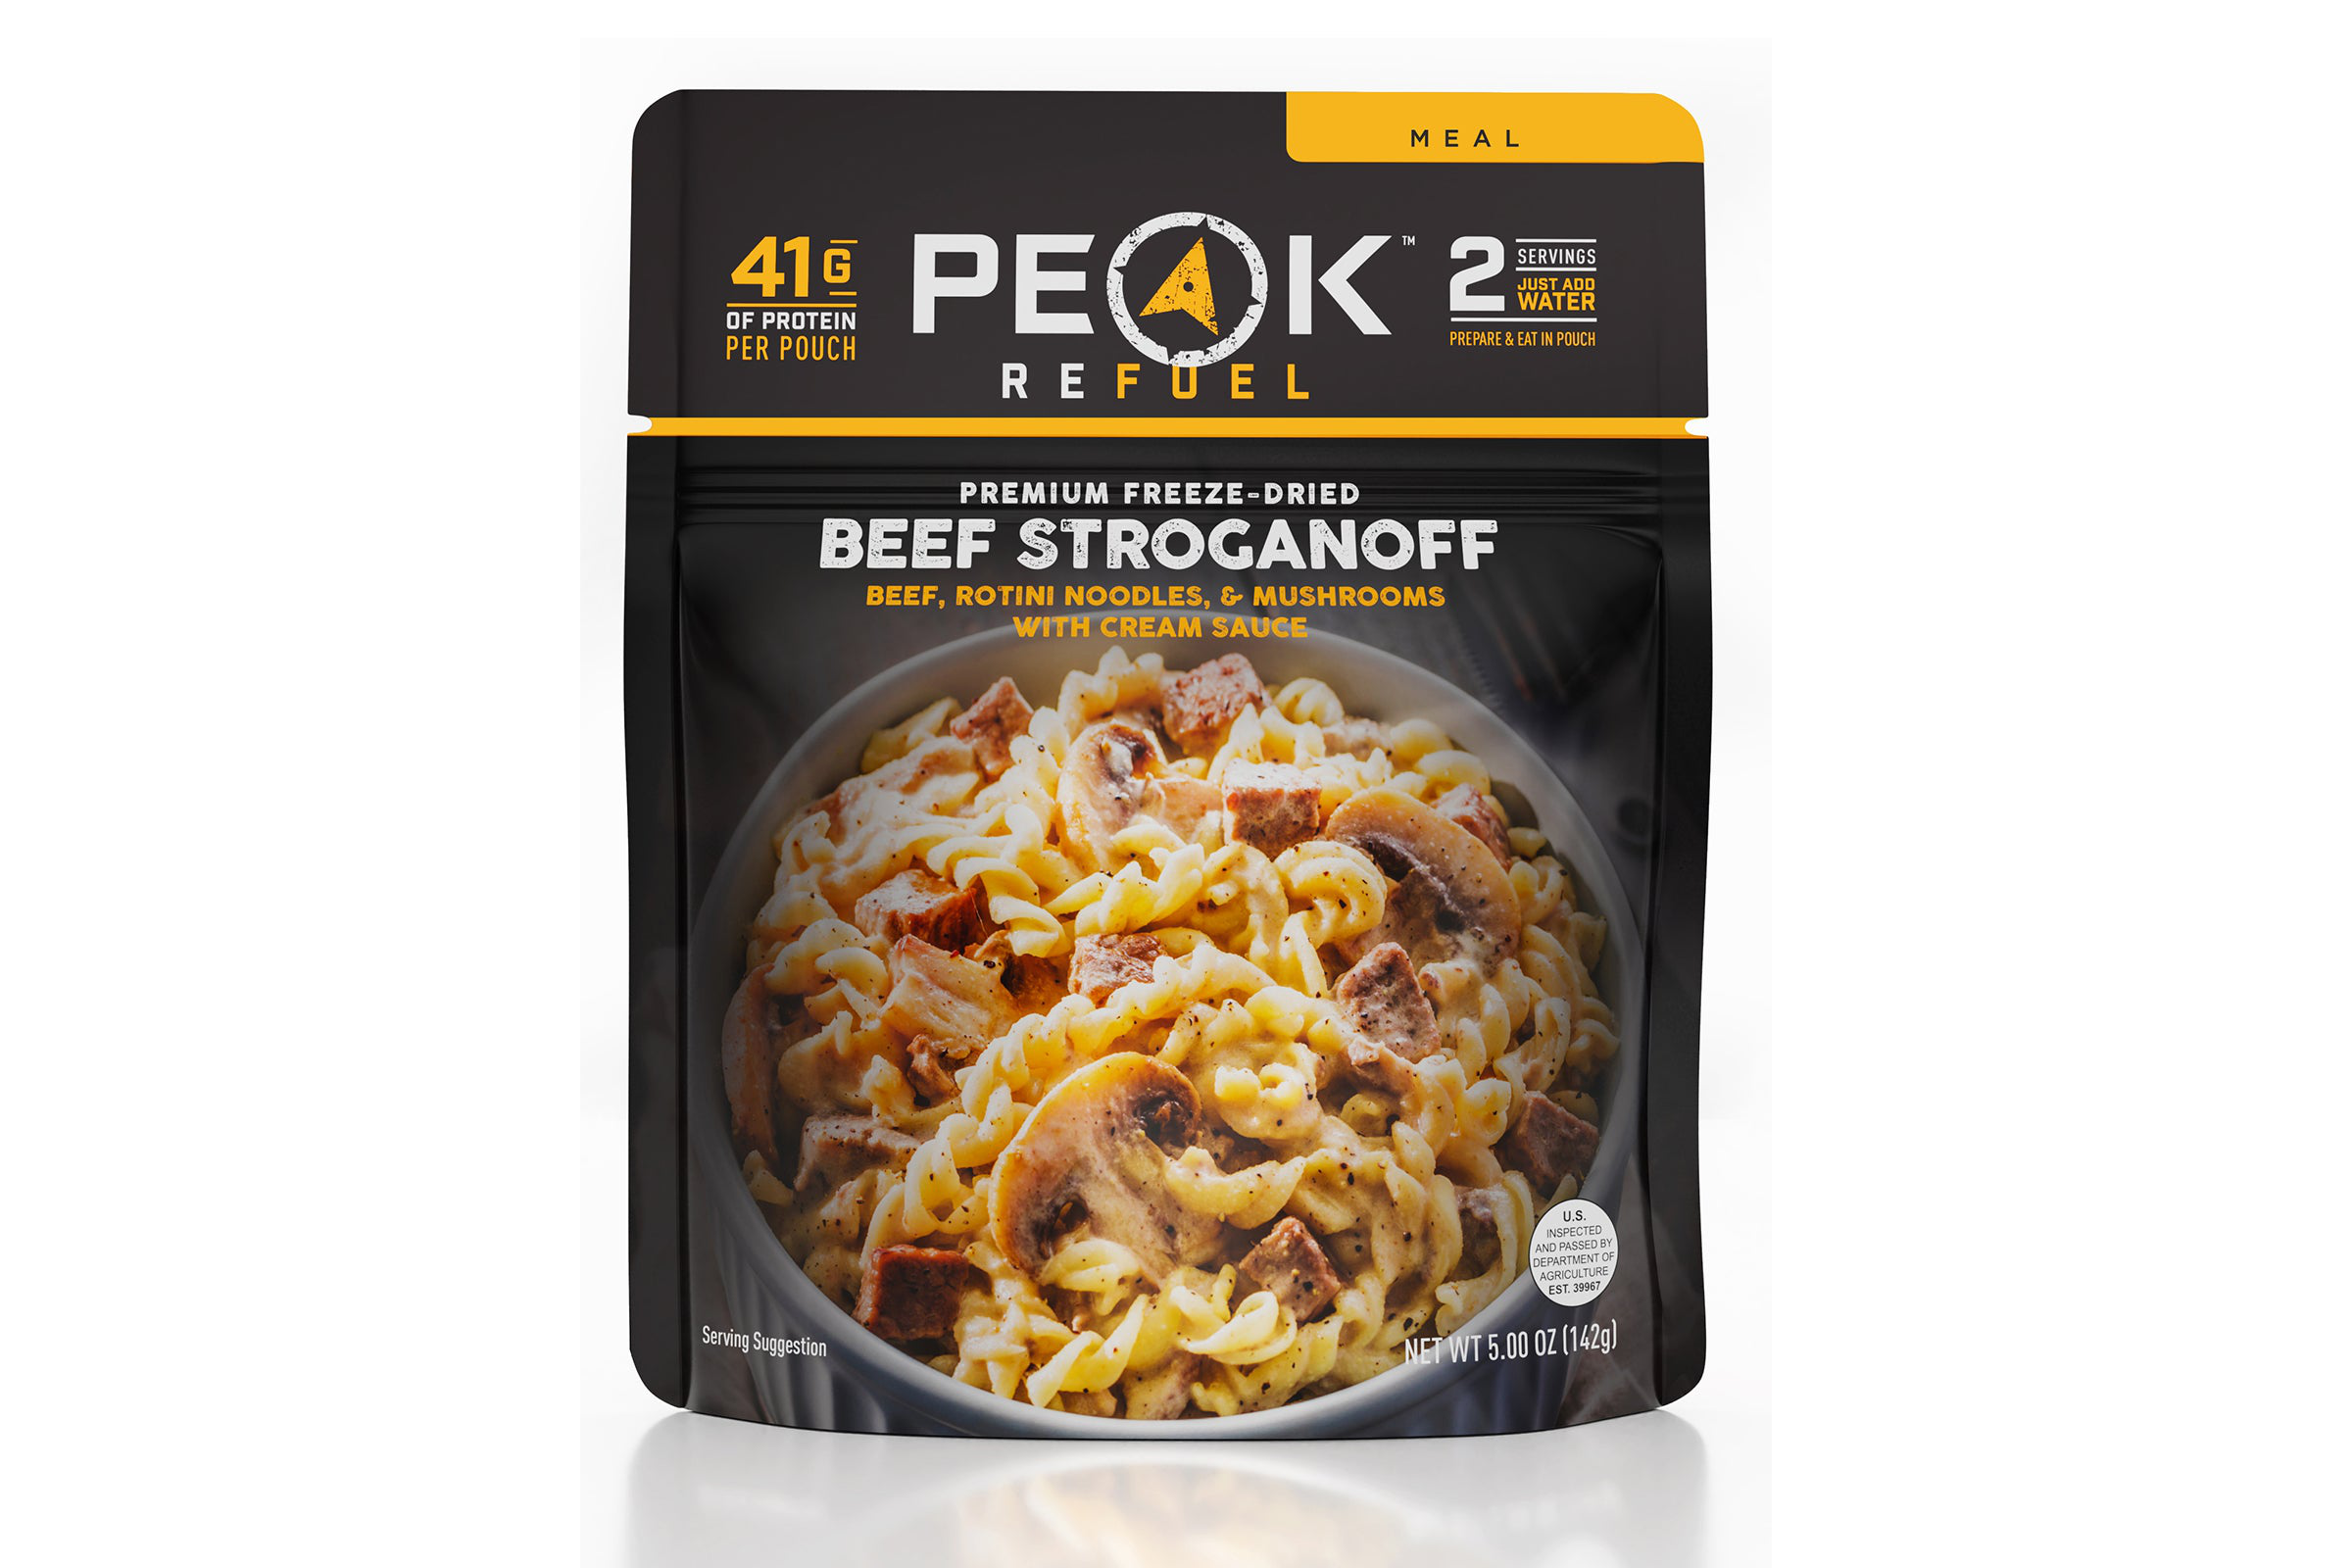 Peak Refuel Beef Stroganoff 2 Serving Pouch